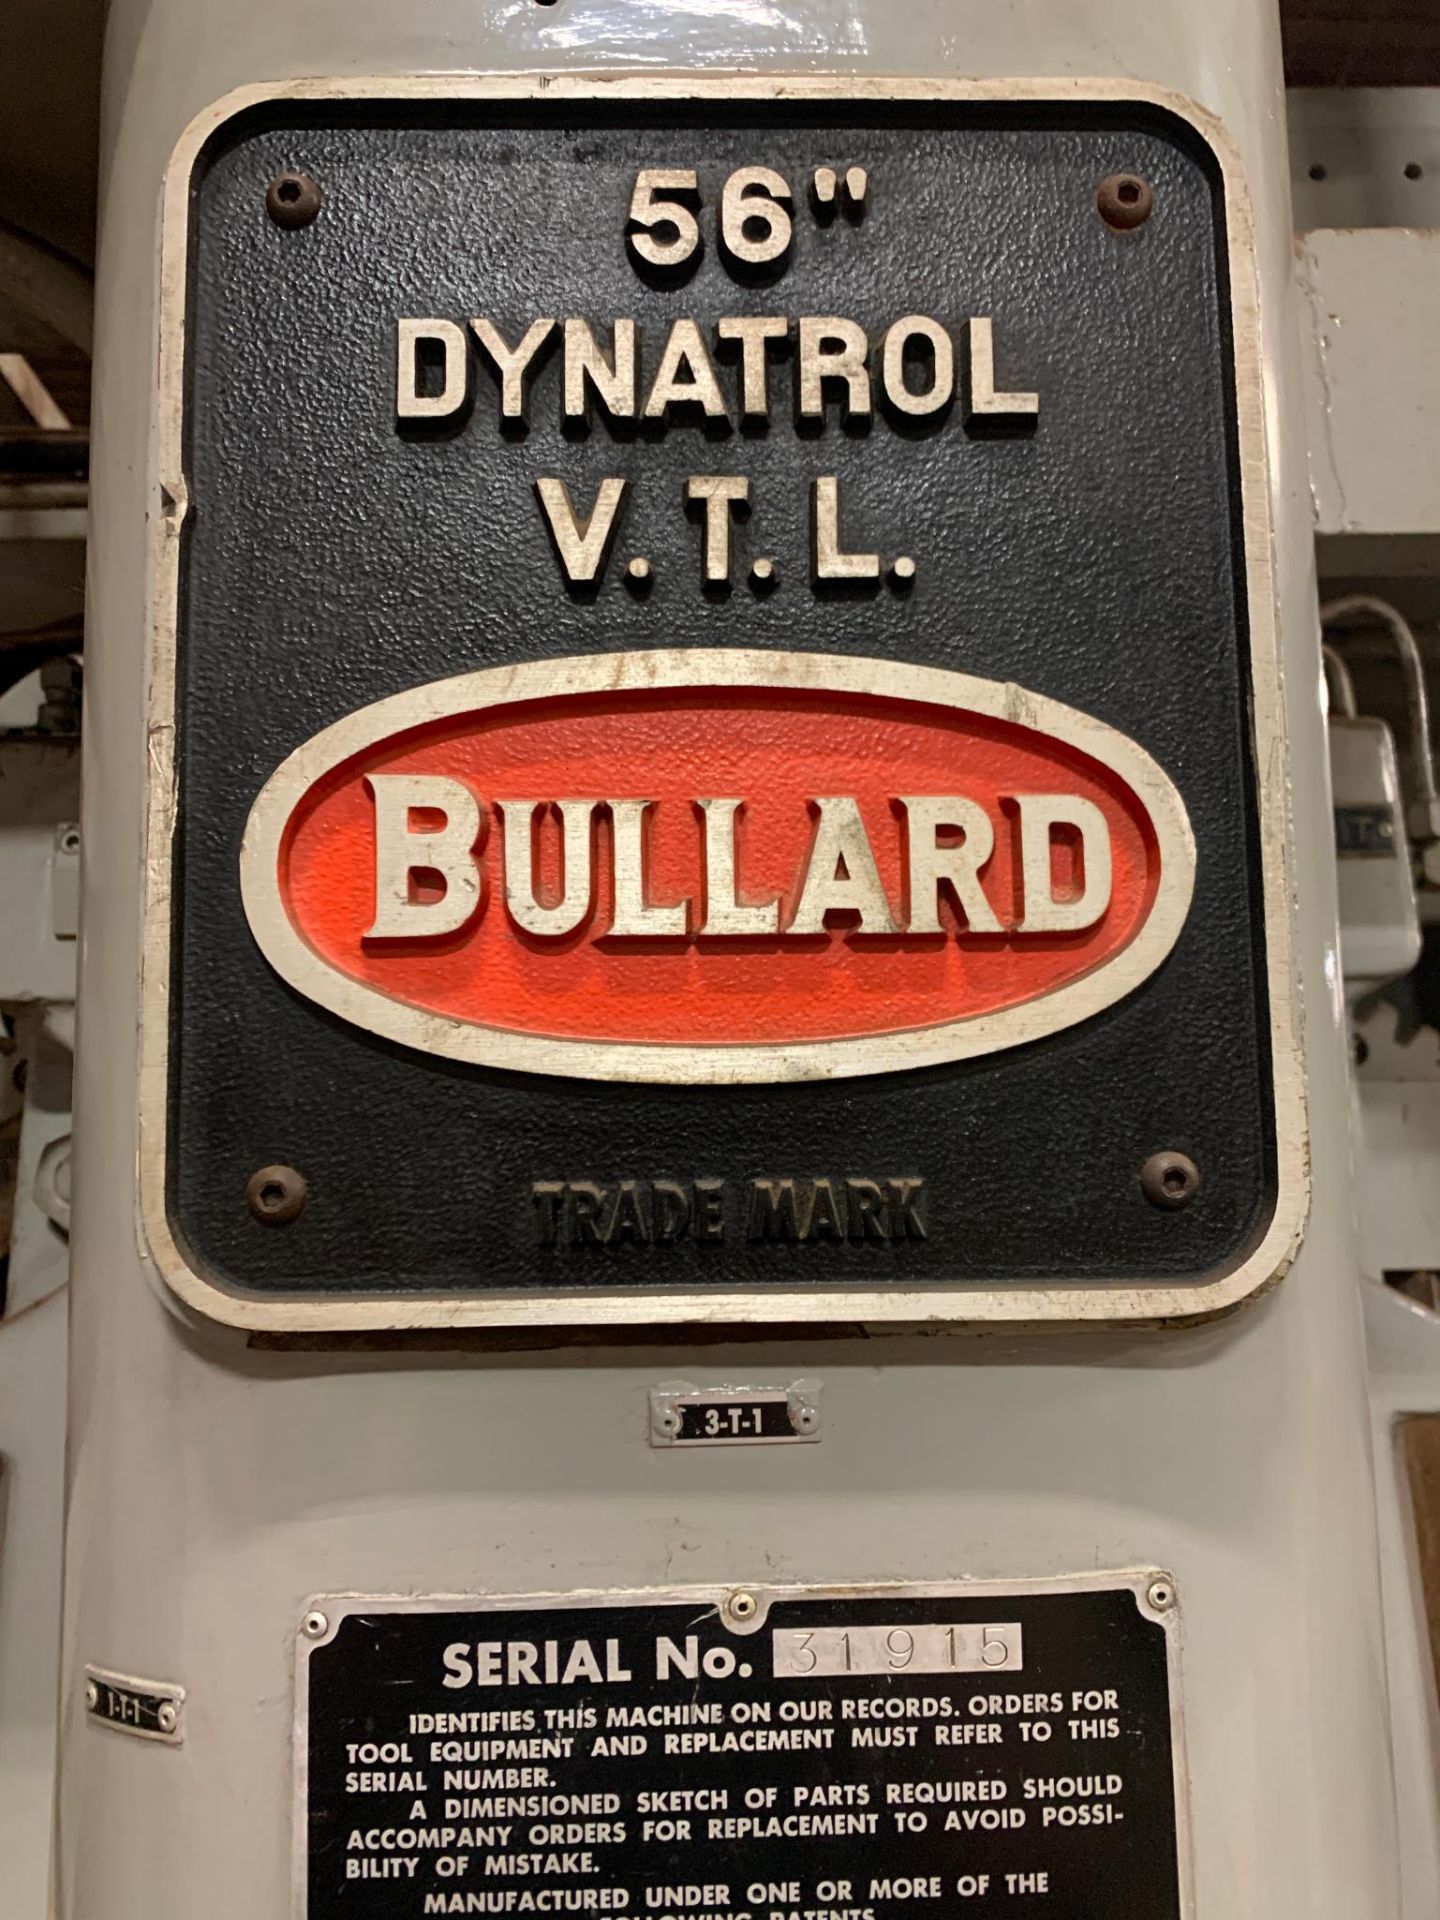 56" Bullard Dynatrol (VTL) Vertical Turret Lathe Model: 56" Dynatrol Serial Number: 31915 56" Bullar - Image 3 of 21